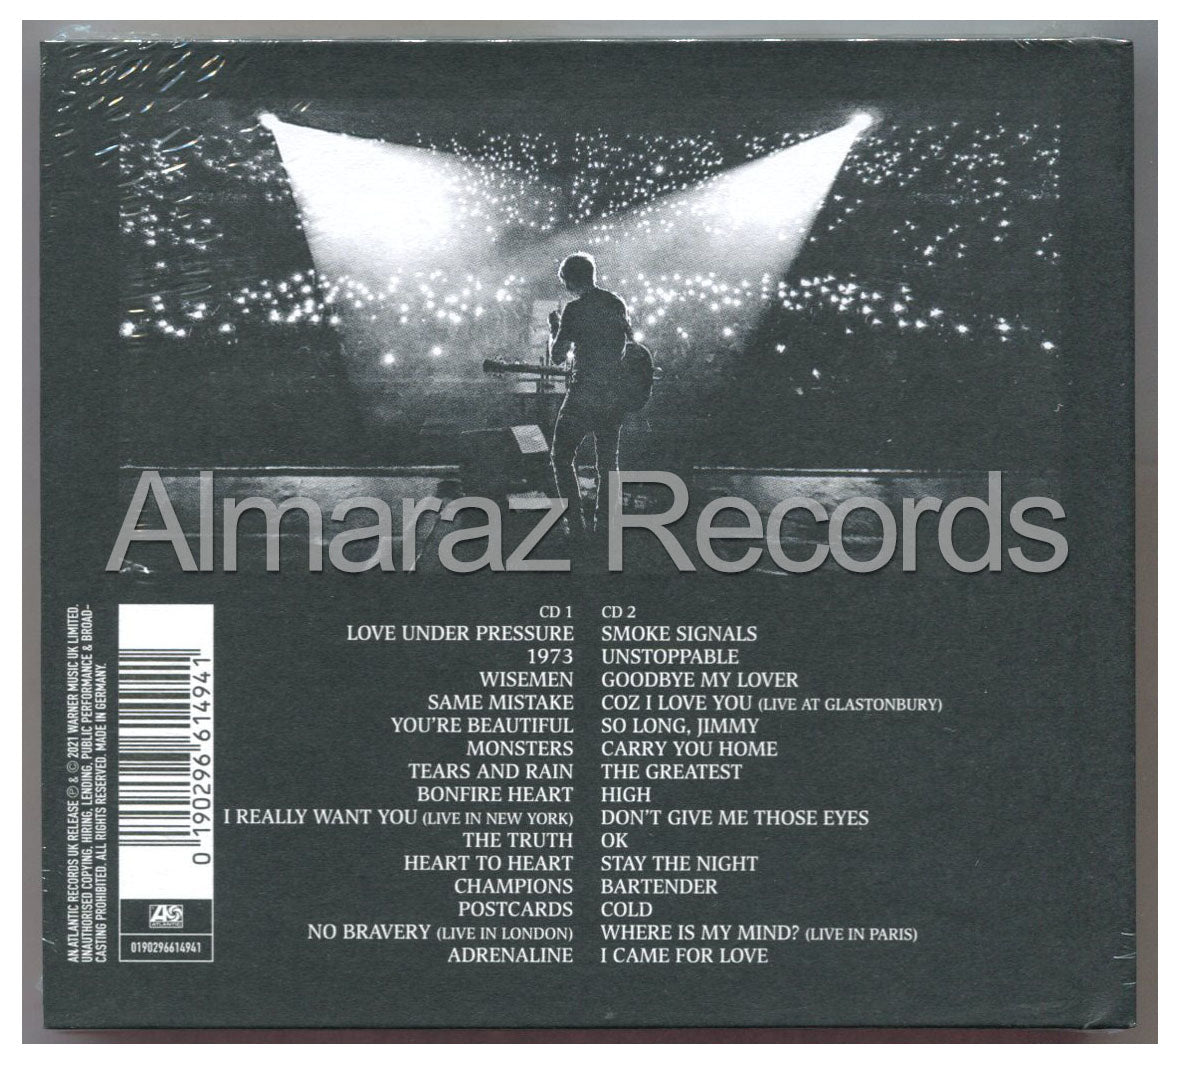 James Blunt The Stars Beneath My Feet 2004-2021 2CD [Importado]